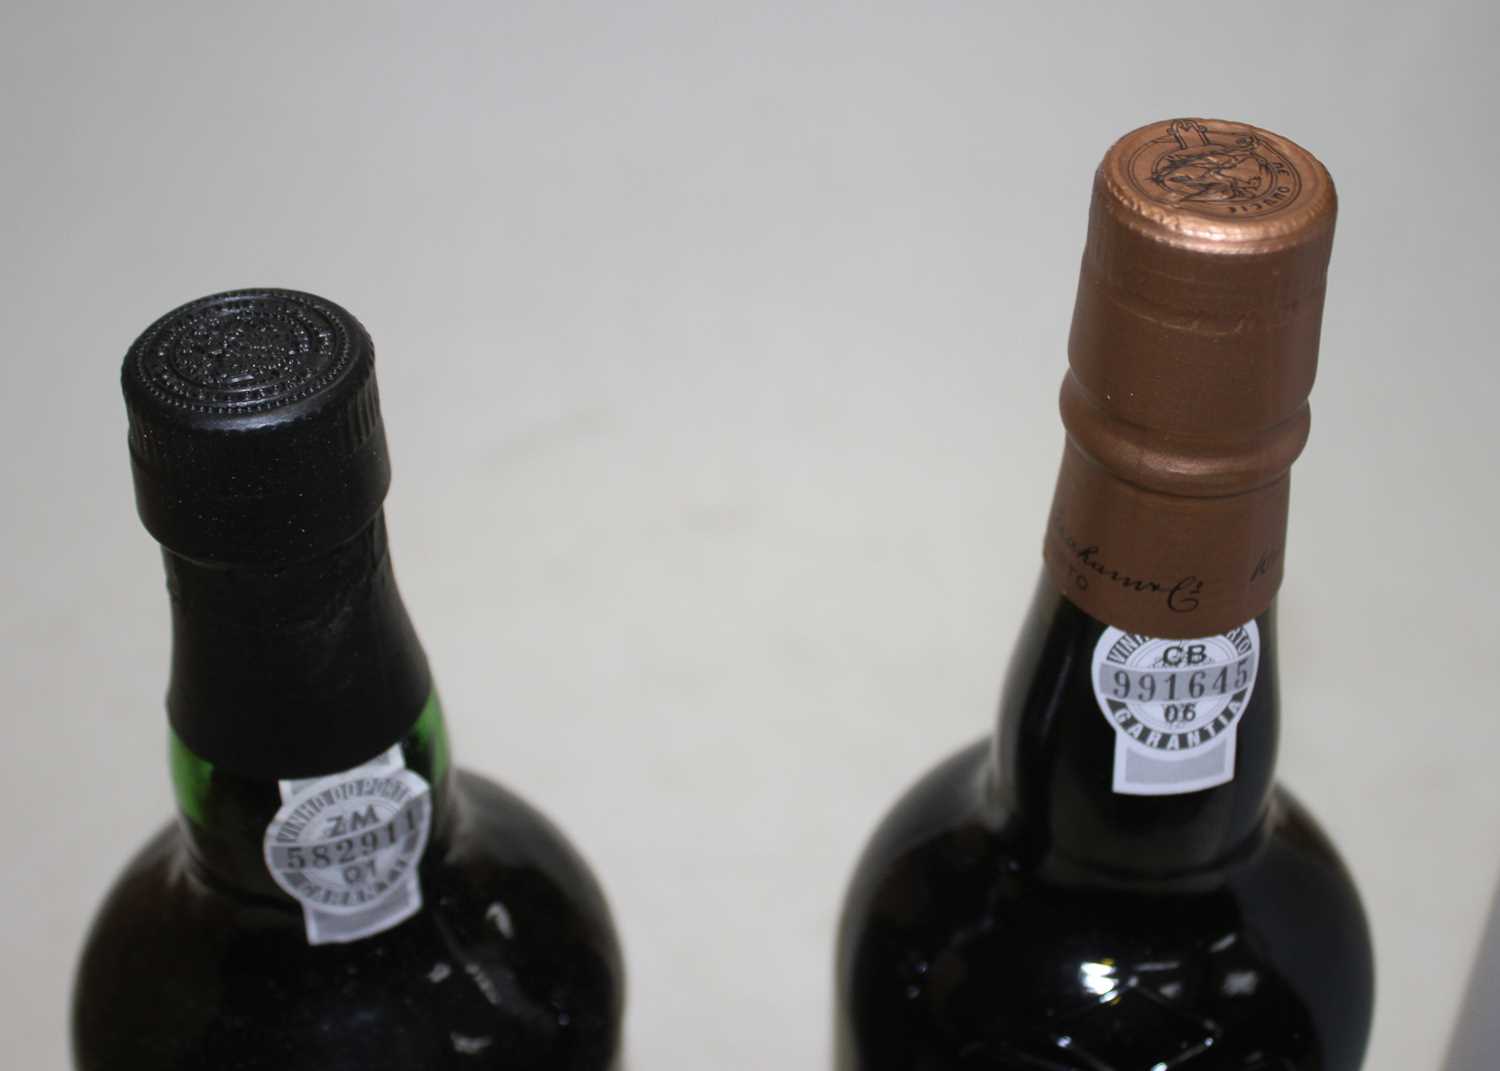 Fonseca Bin No.27 Fine Reserve port, one bottle (OWC); Graham's LBV port, 2014, one bottle in - Image 4 of 6